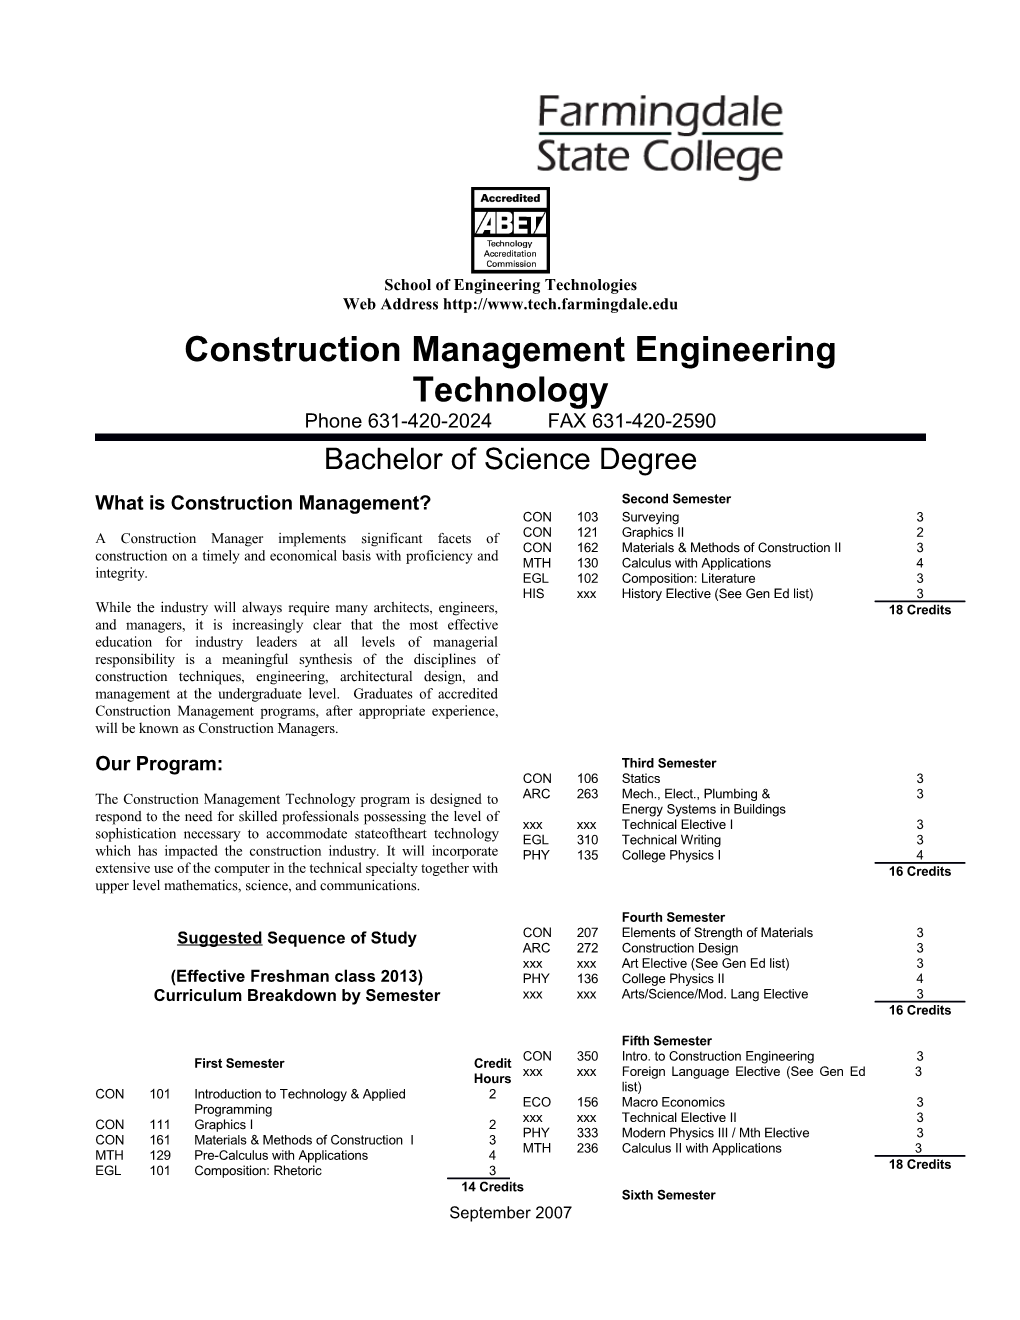 Construction Management Engineering Technology